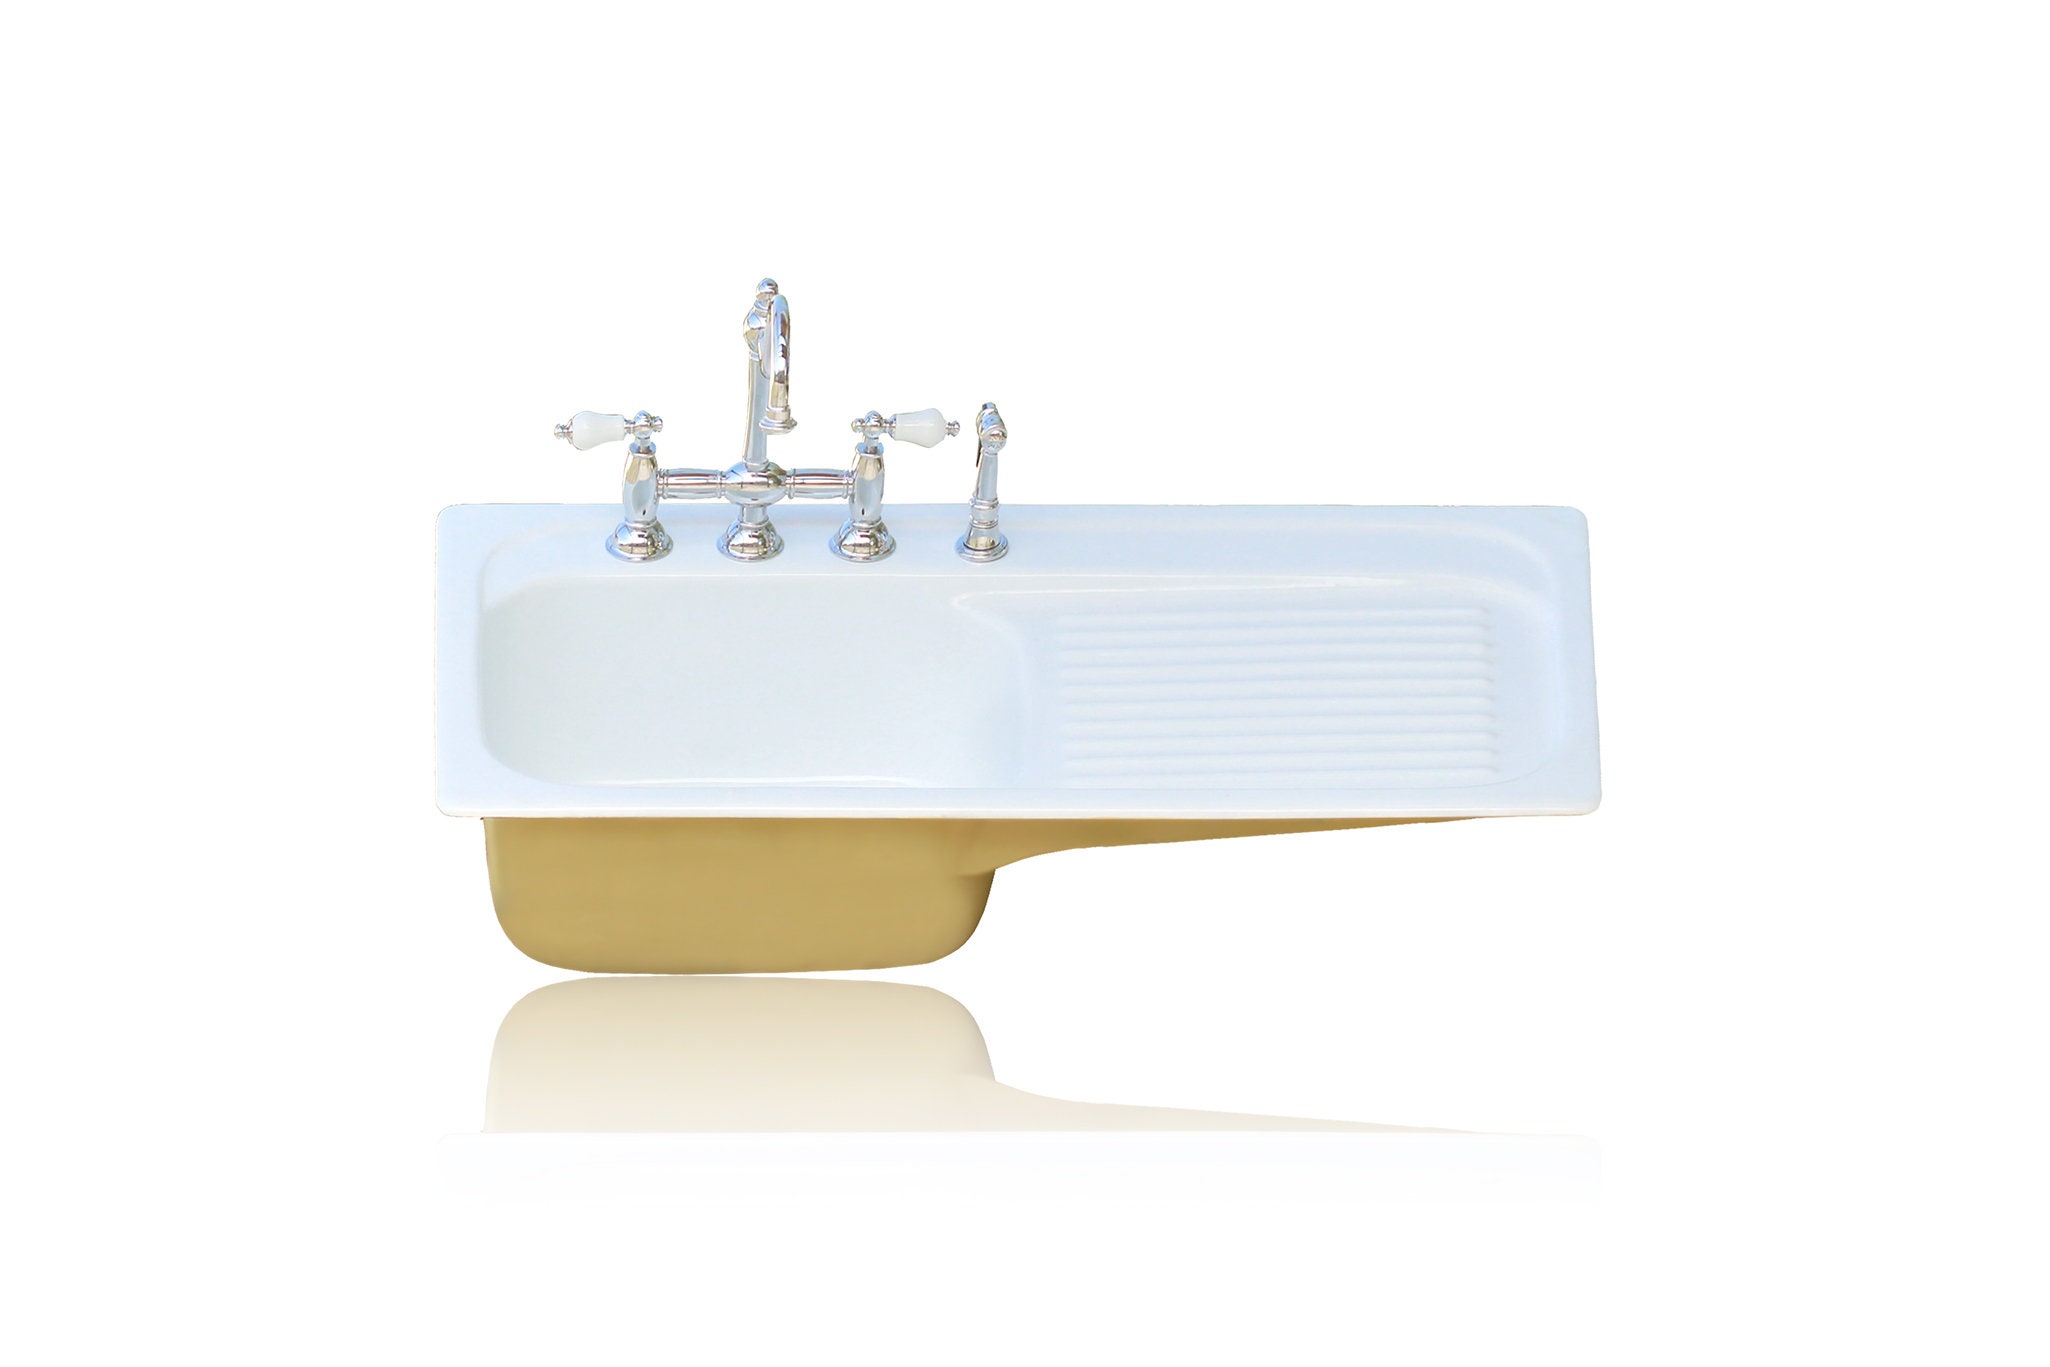 Custom Drainboard Sink - Stainless - Havens